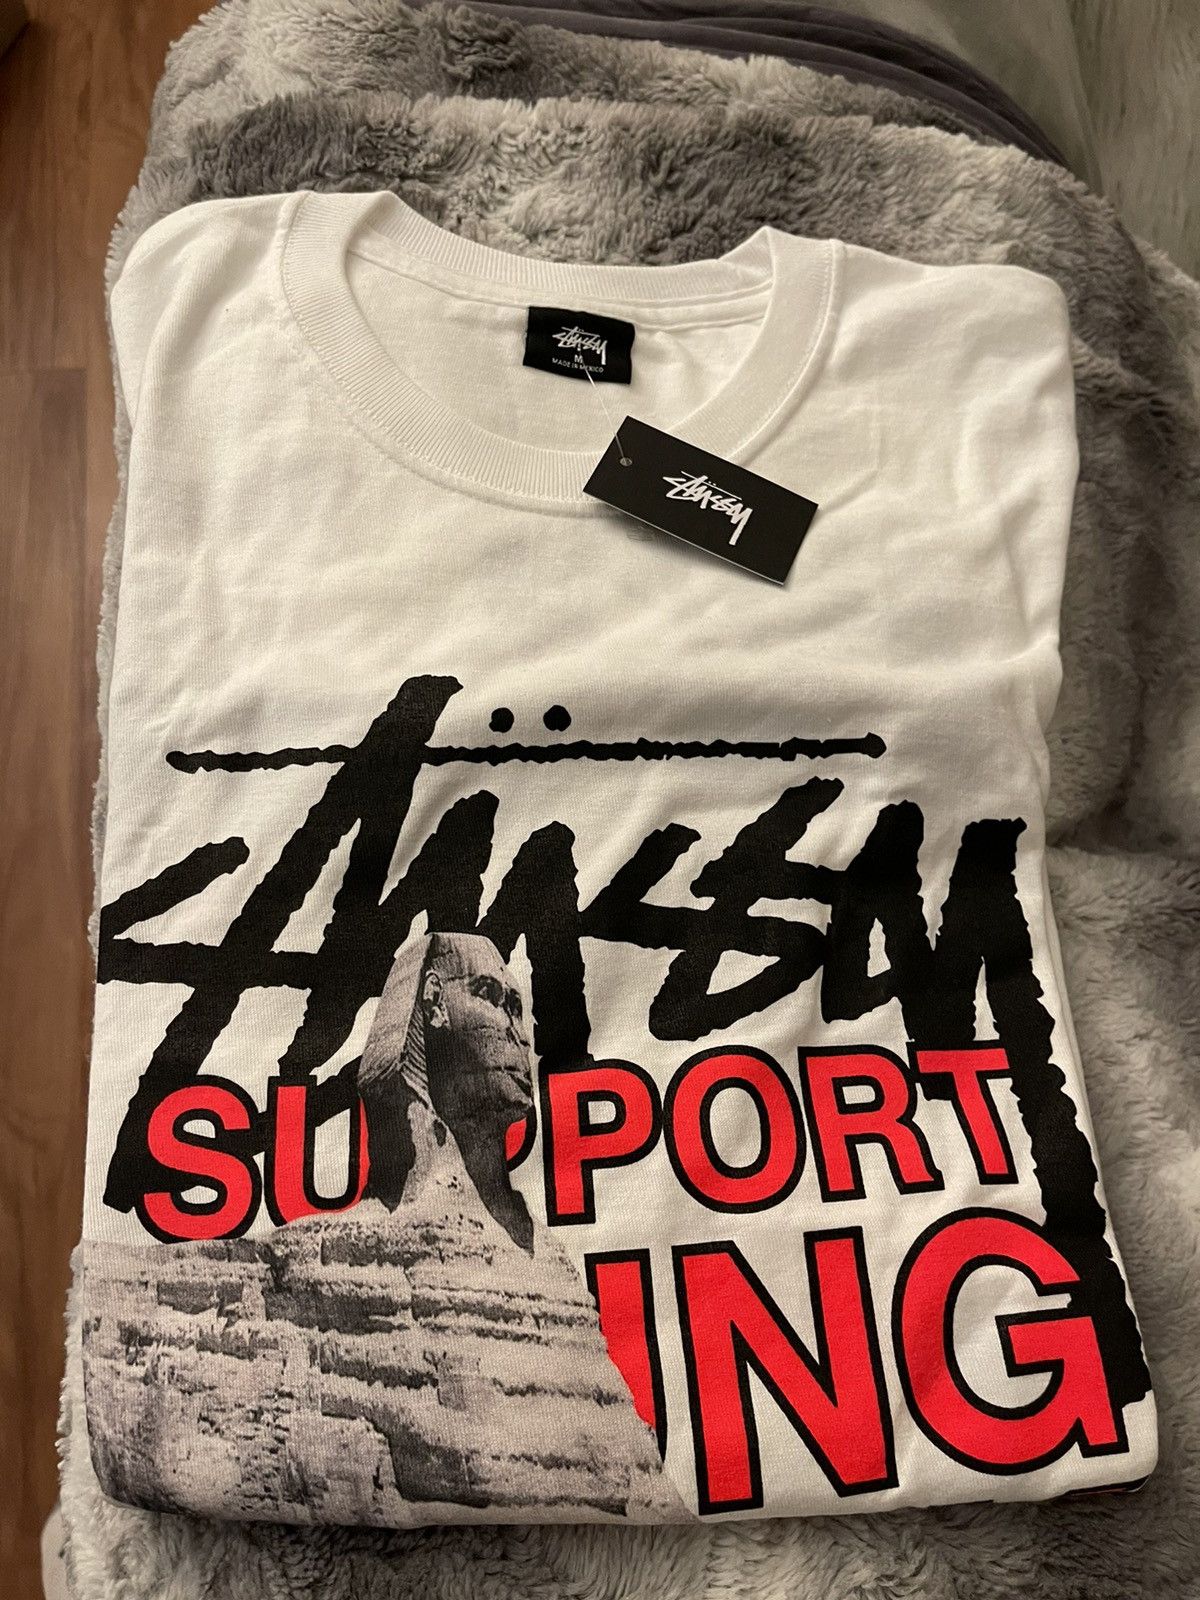 Stussy x Virgil Abloh World Tour Collection T-shirt - Stussy